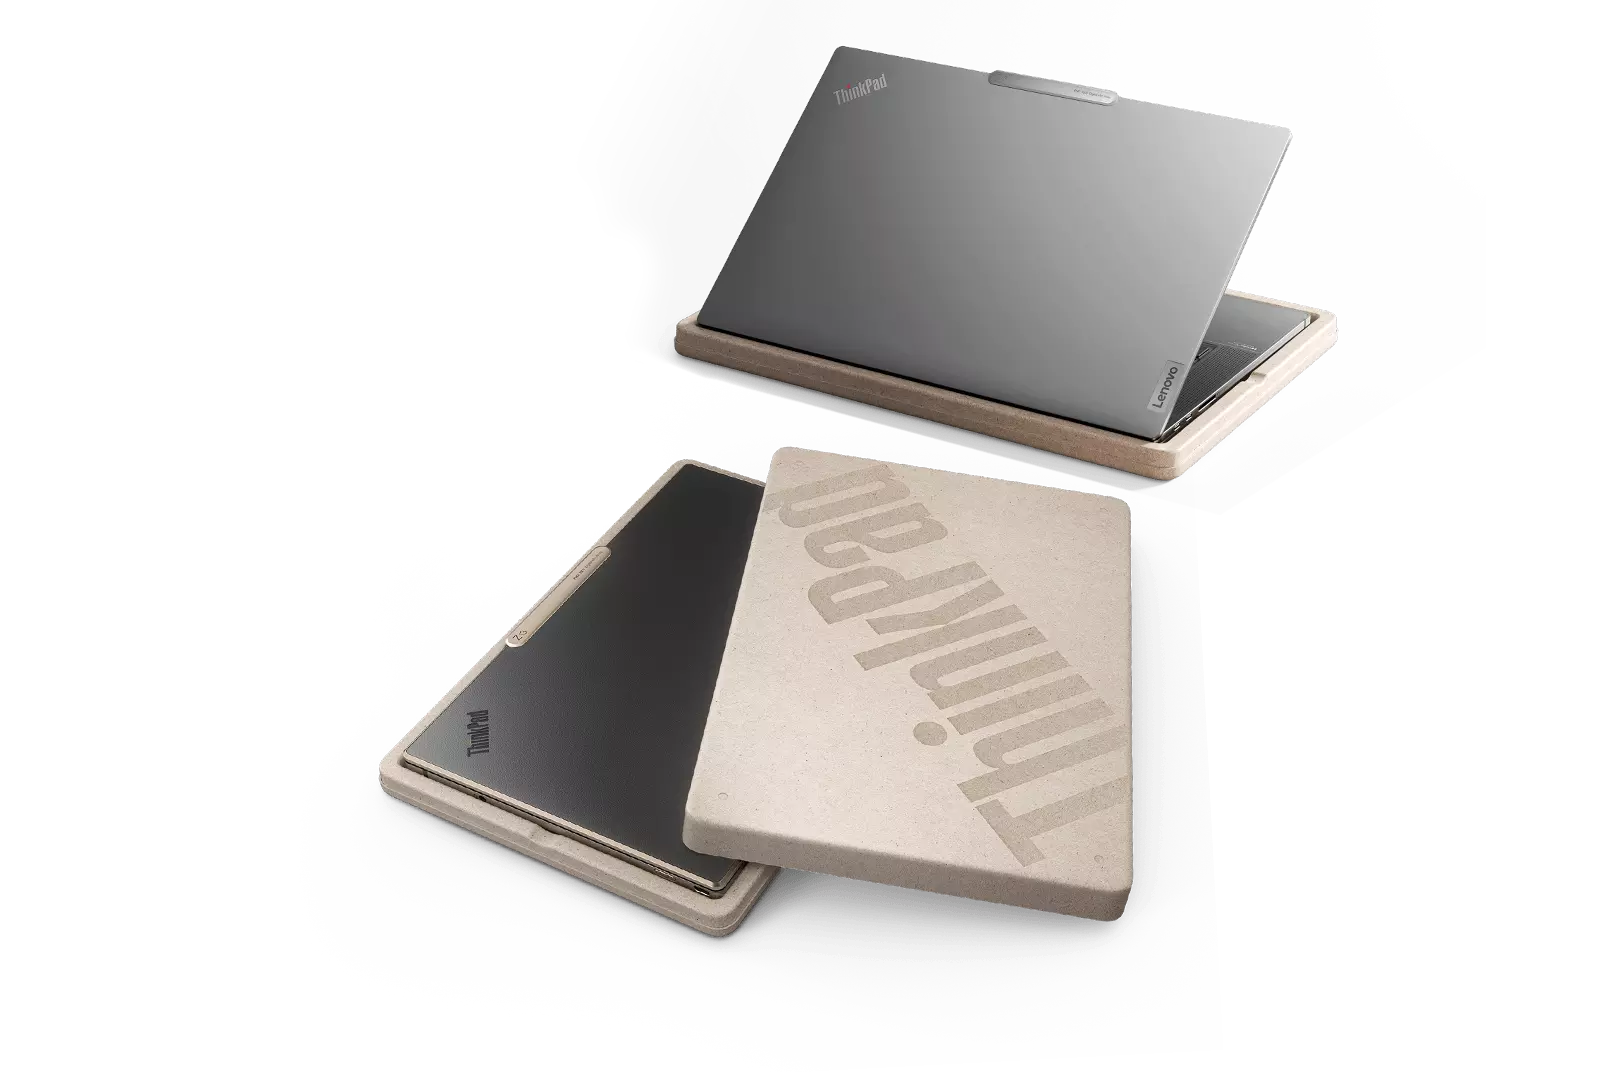 Thinkpad Z laptops